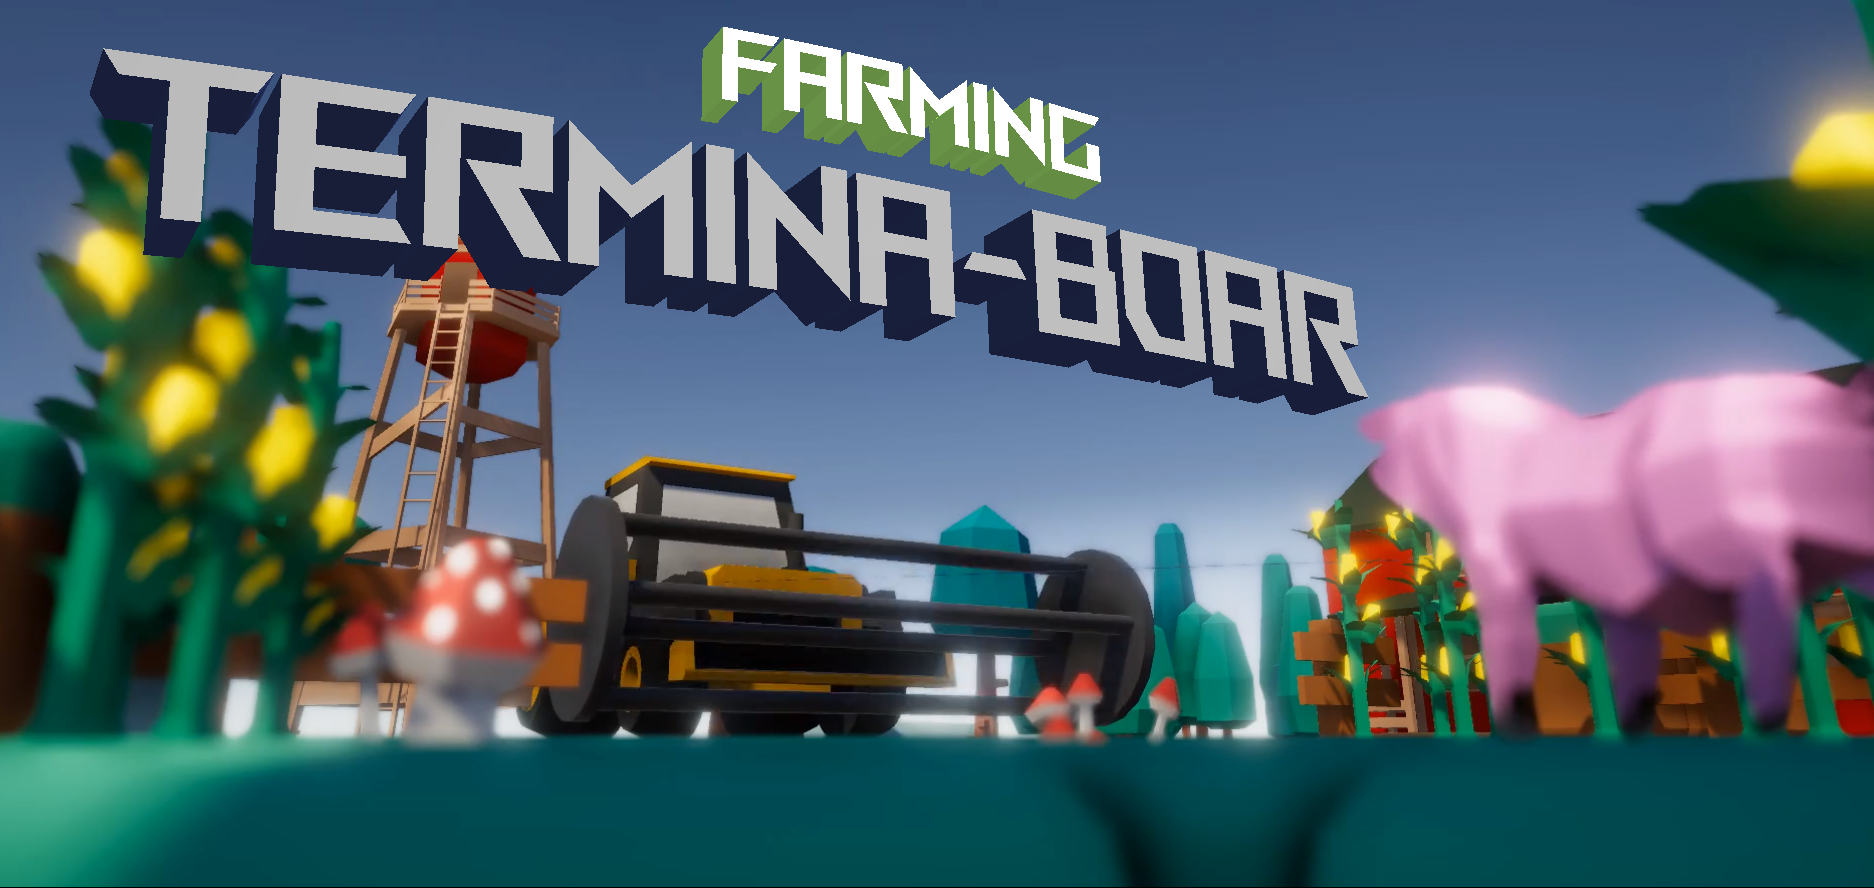 Farming Termina-Boar